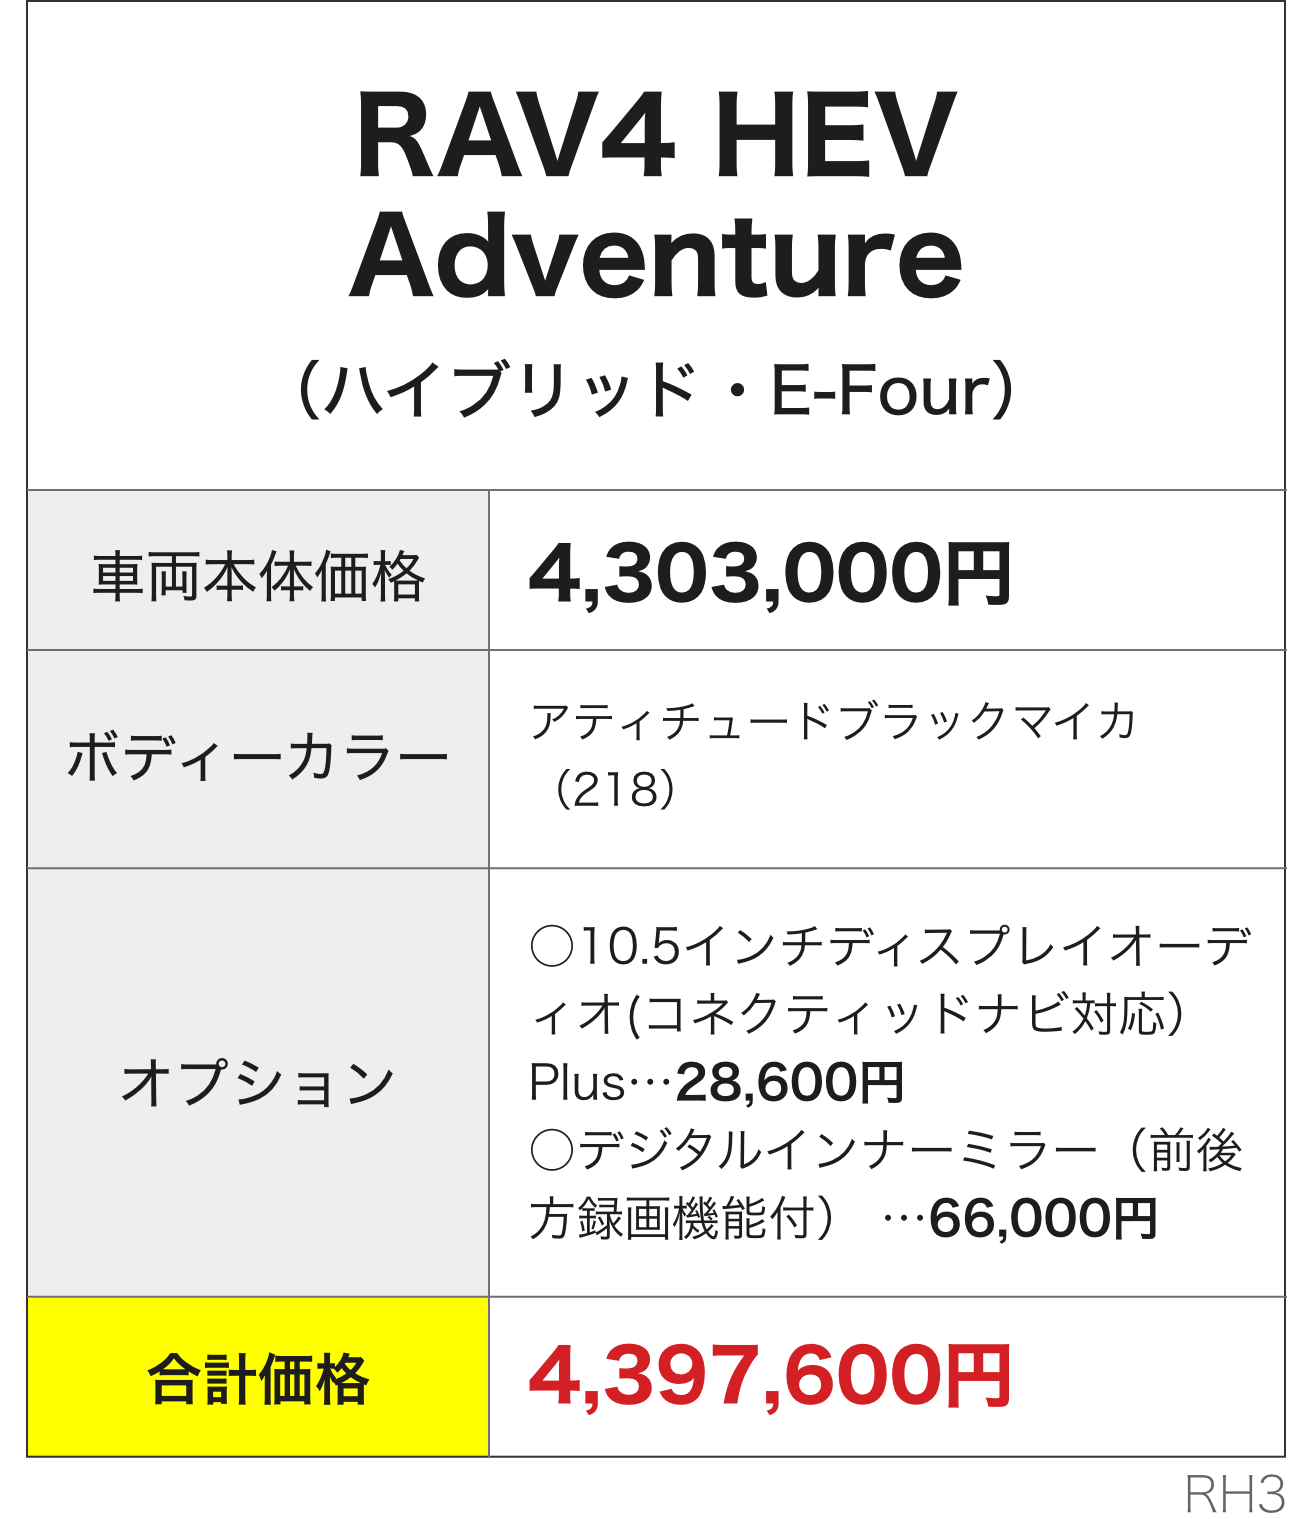 RAV4 HEV Adventure 合計価格4,397,600円